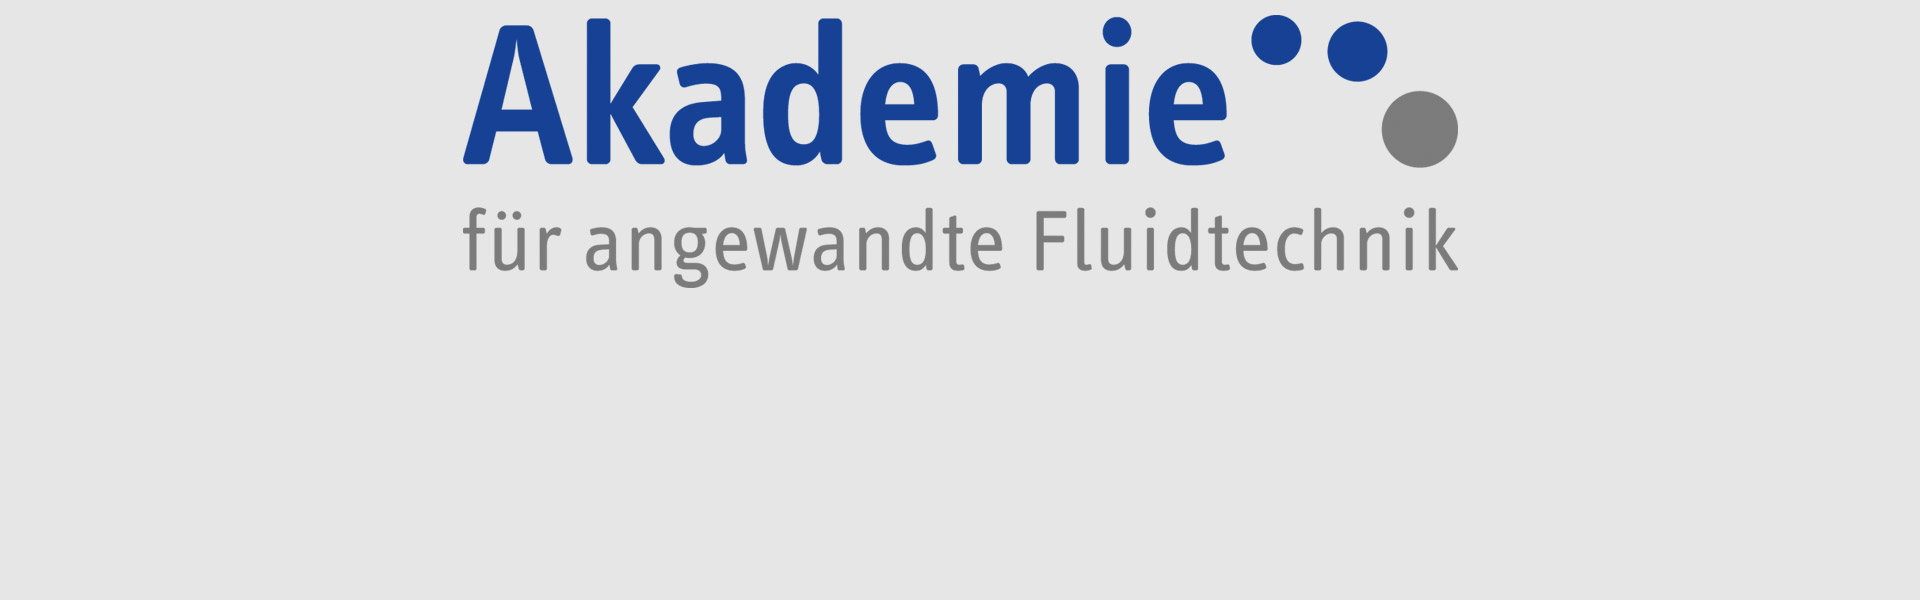 Academy for Applied Fluid Technology